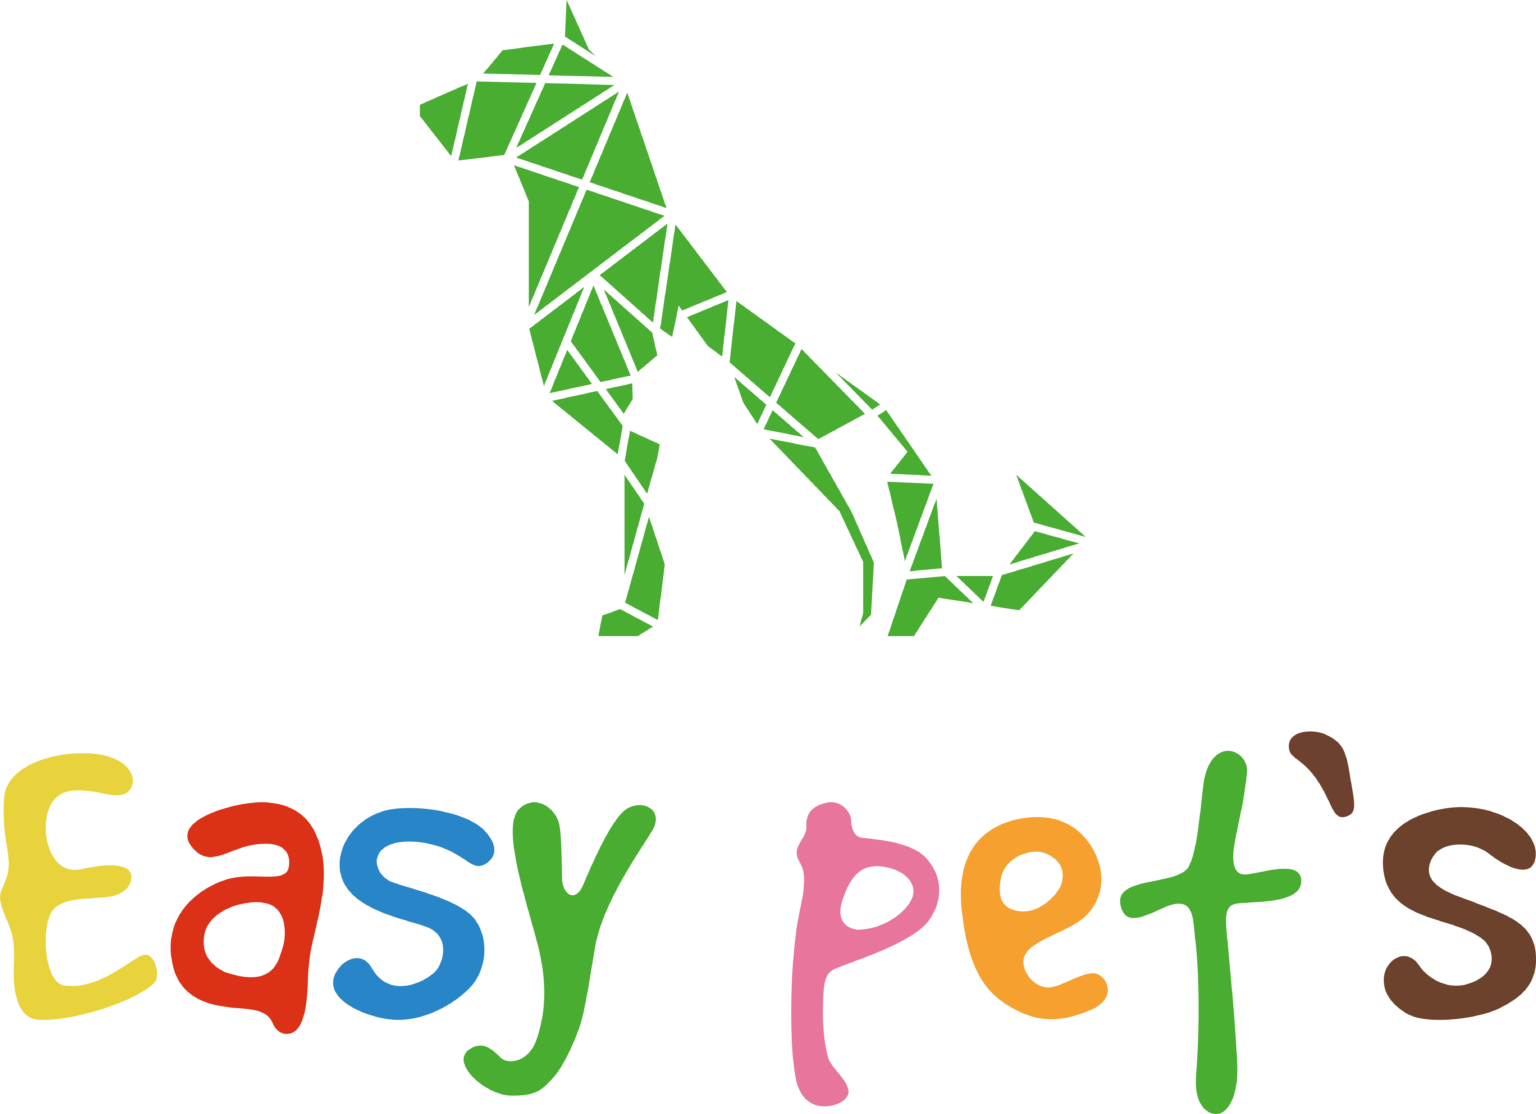 Easy pets